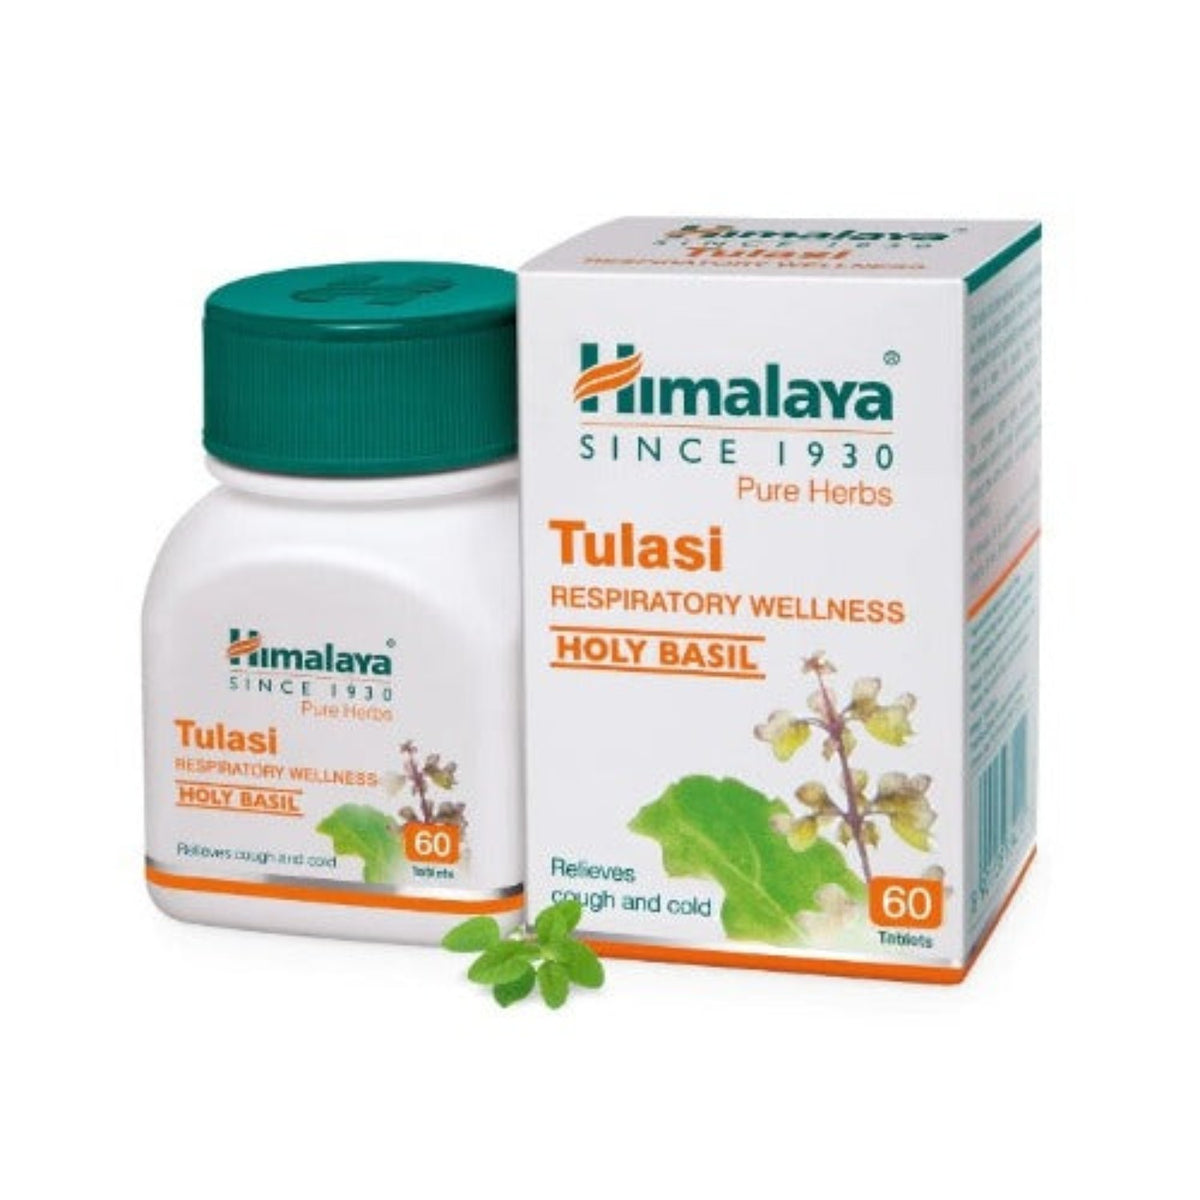 Himalaya Pure Herbs Respiratory Wellness Herbal Ayurvedic Tulasi Heiliges Basilikum lindert Husten und Erkältung, 60 Tabletten